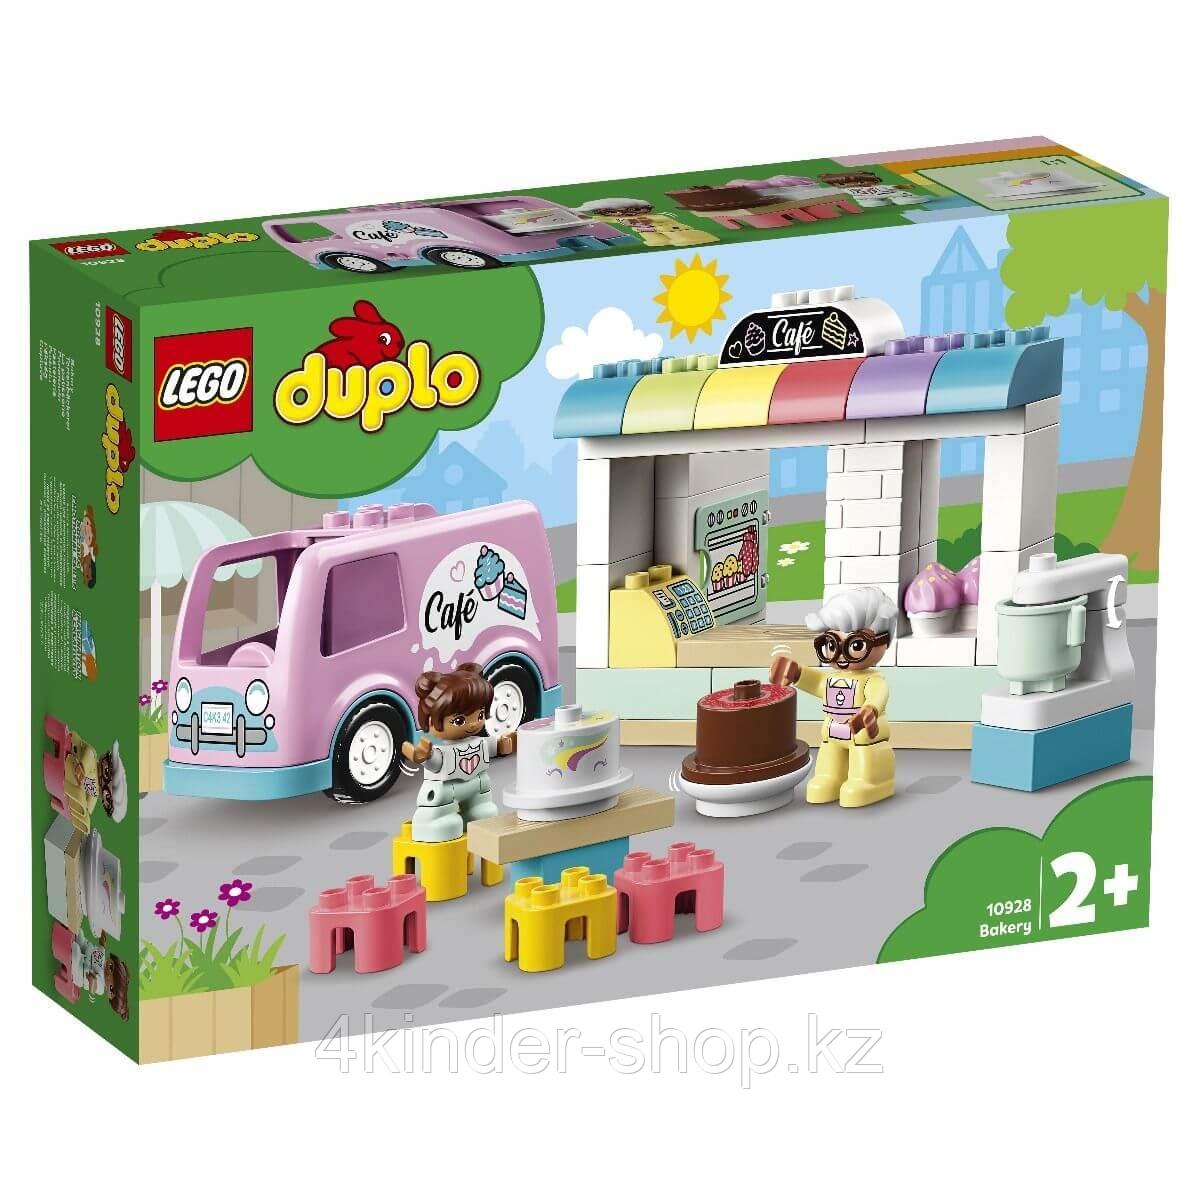 LEGO: Пекарня DUPLO 10928